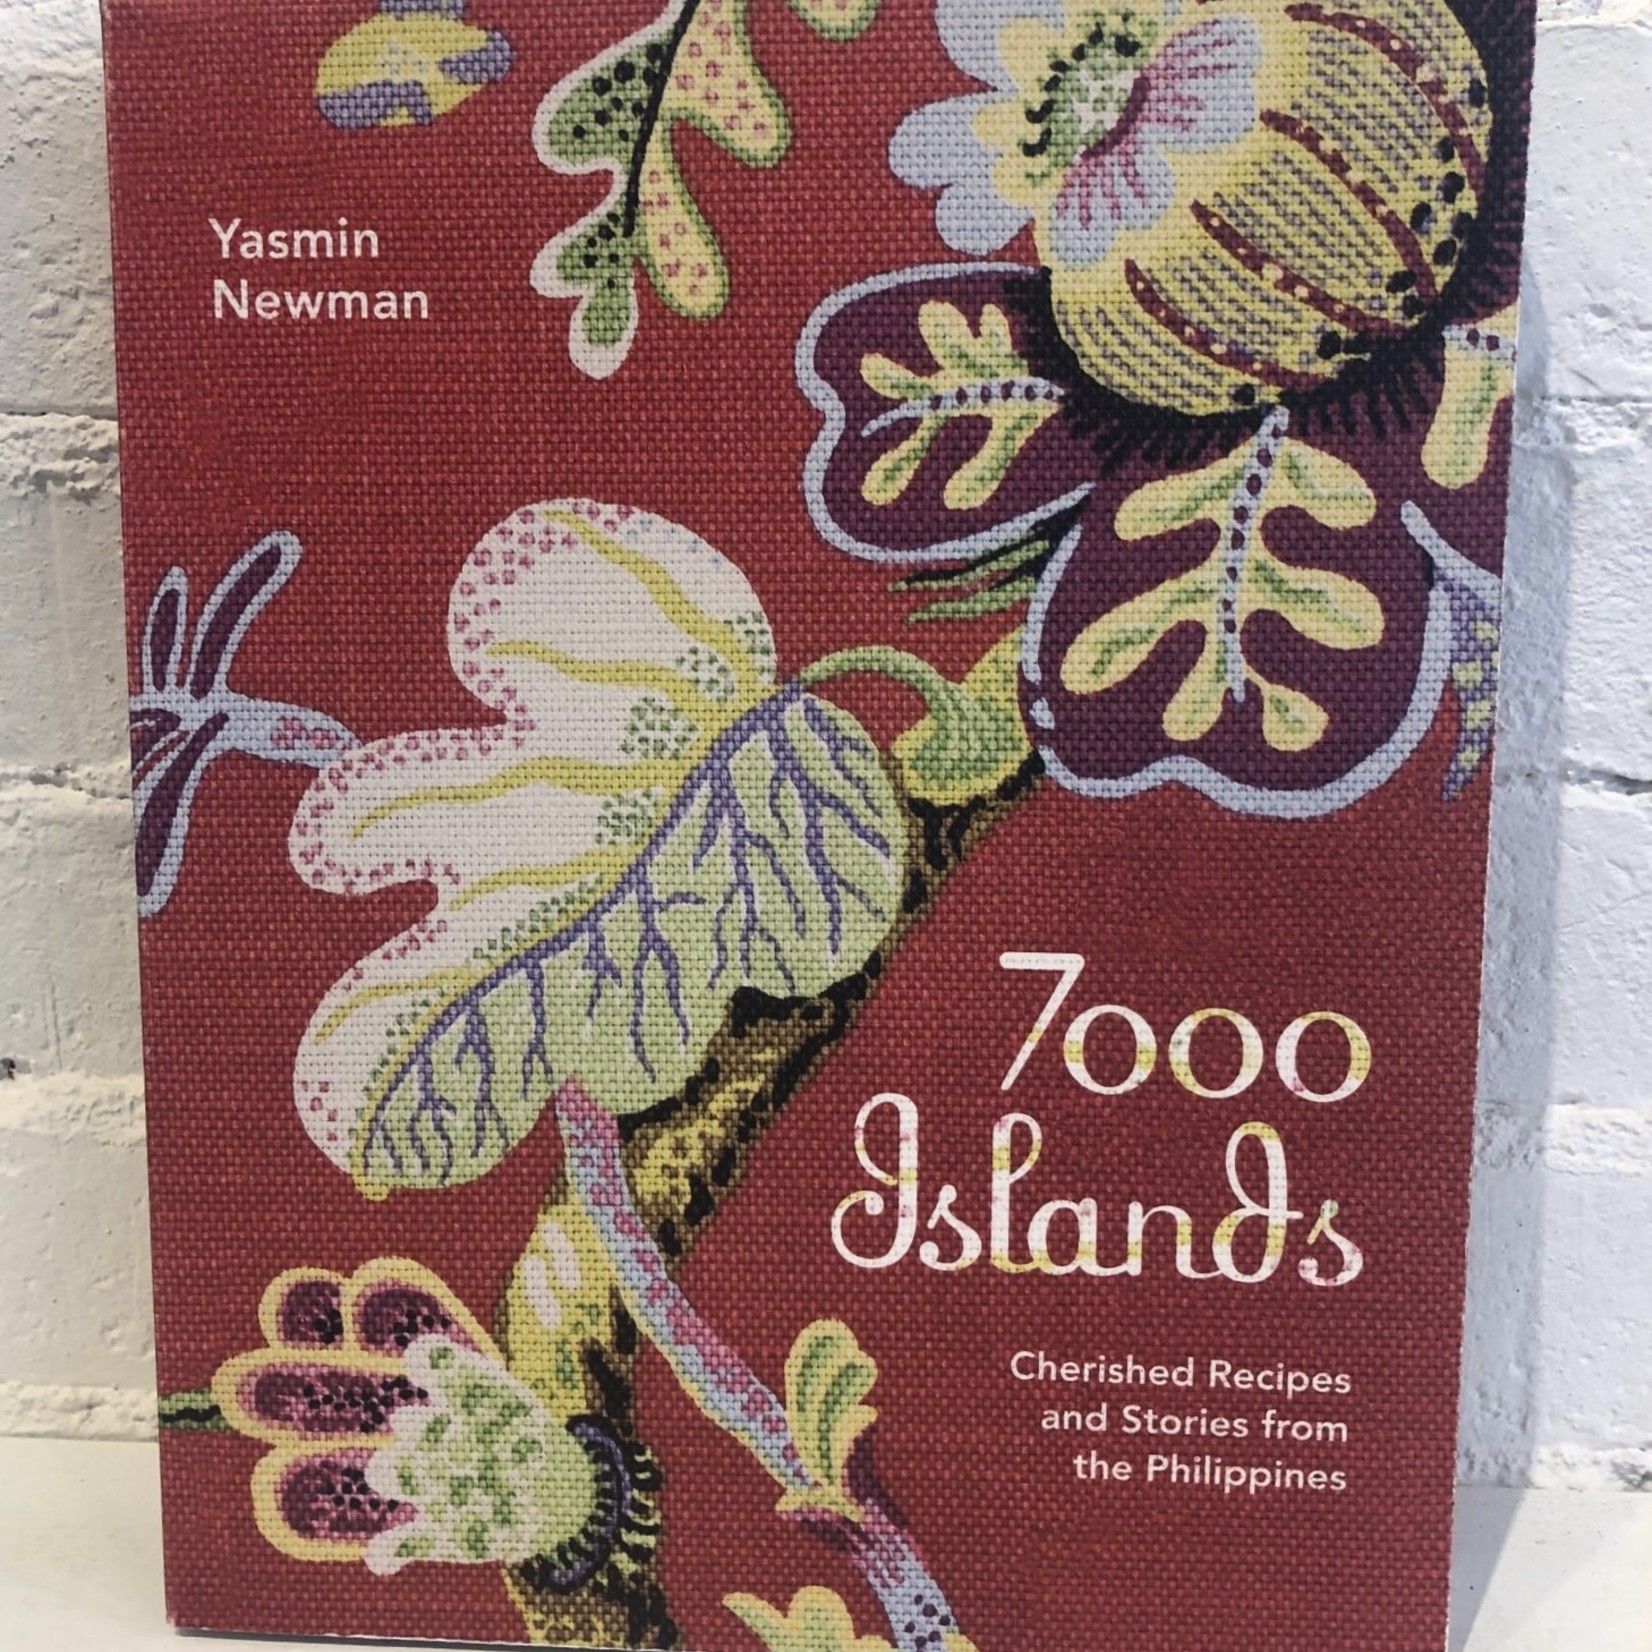 7000 Islands by Yasmin Newman